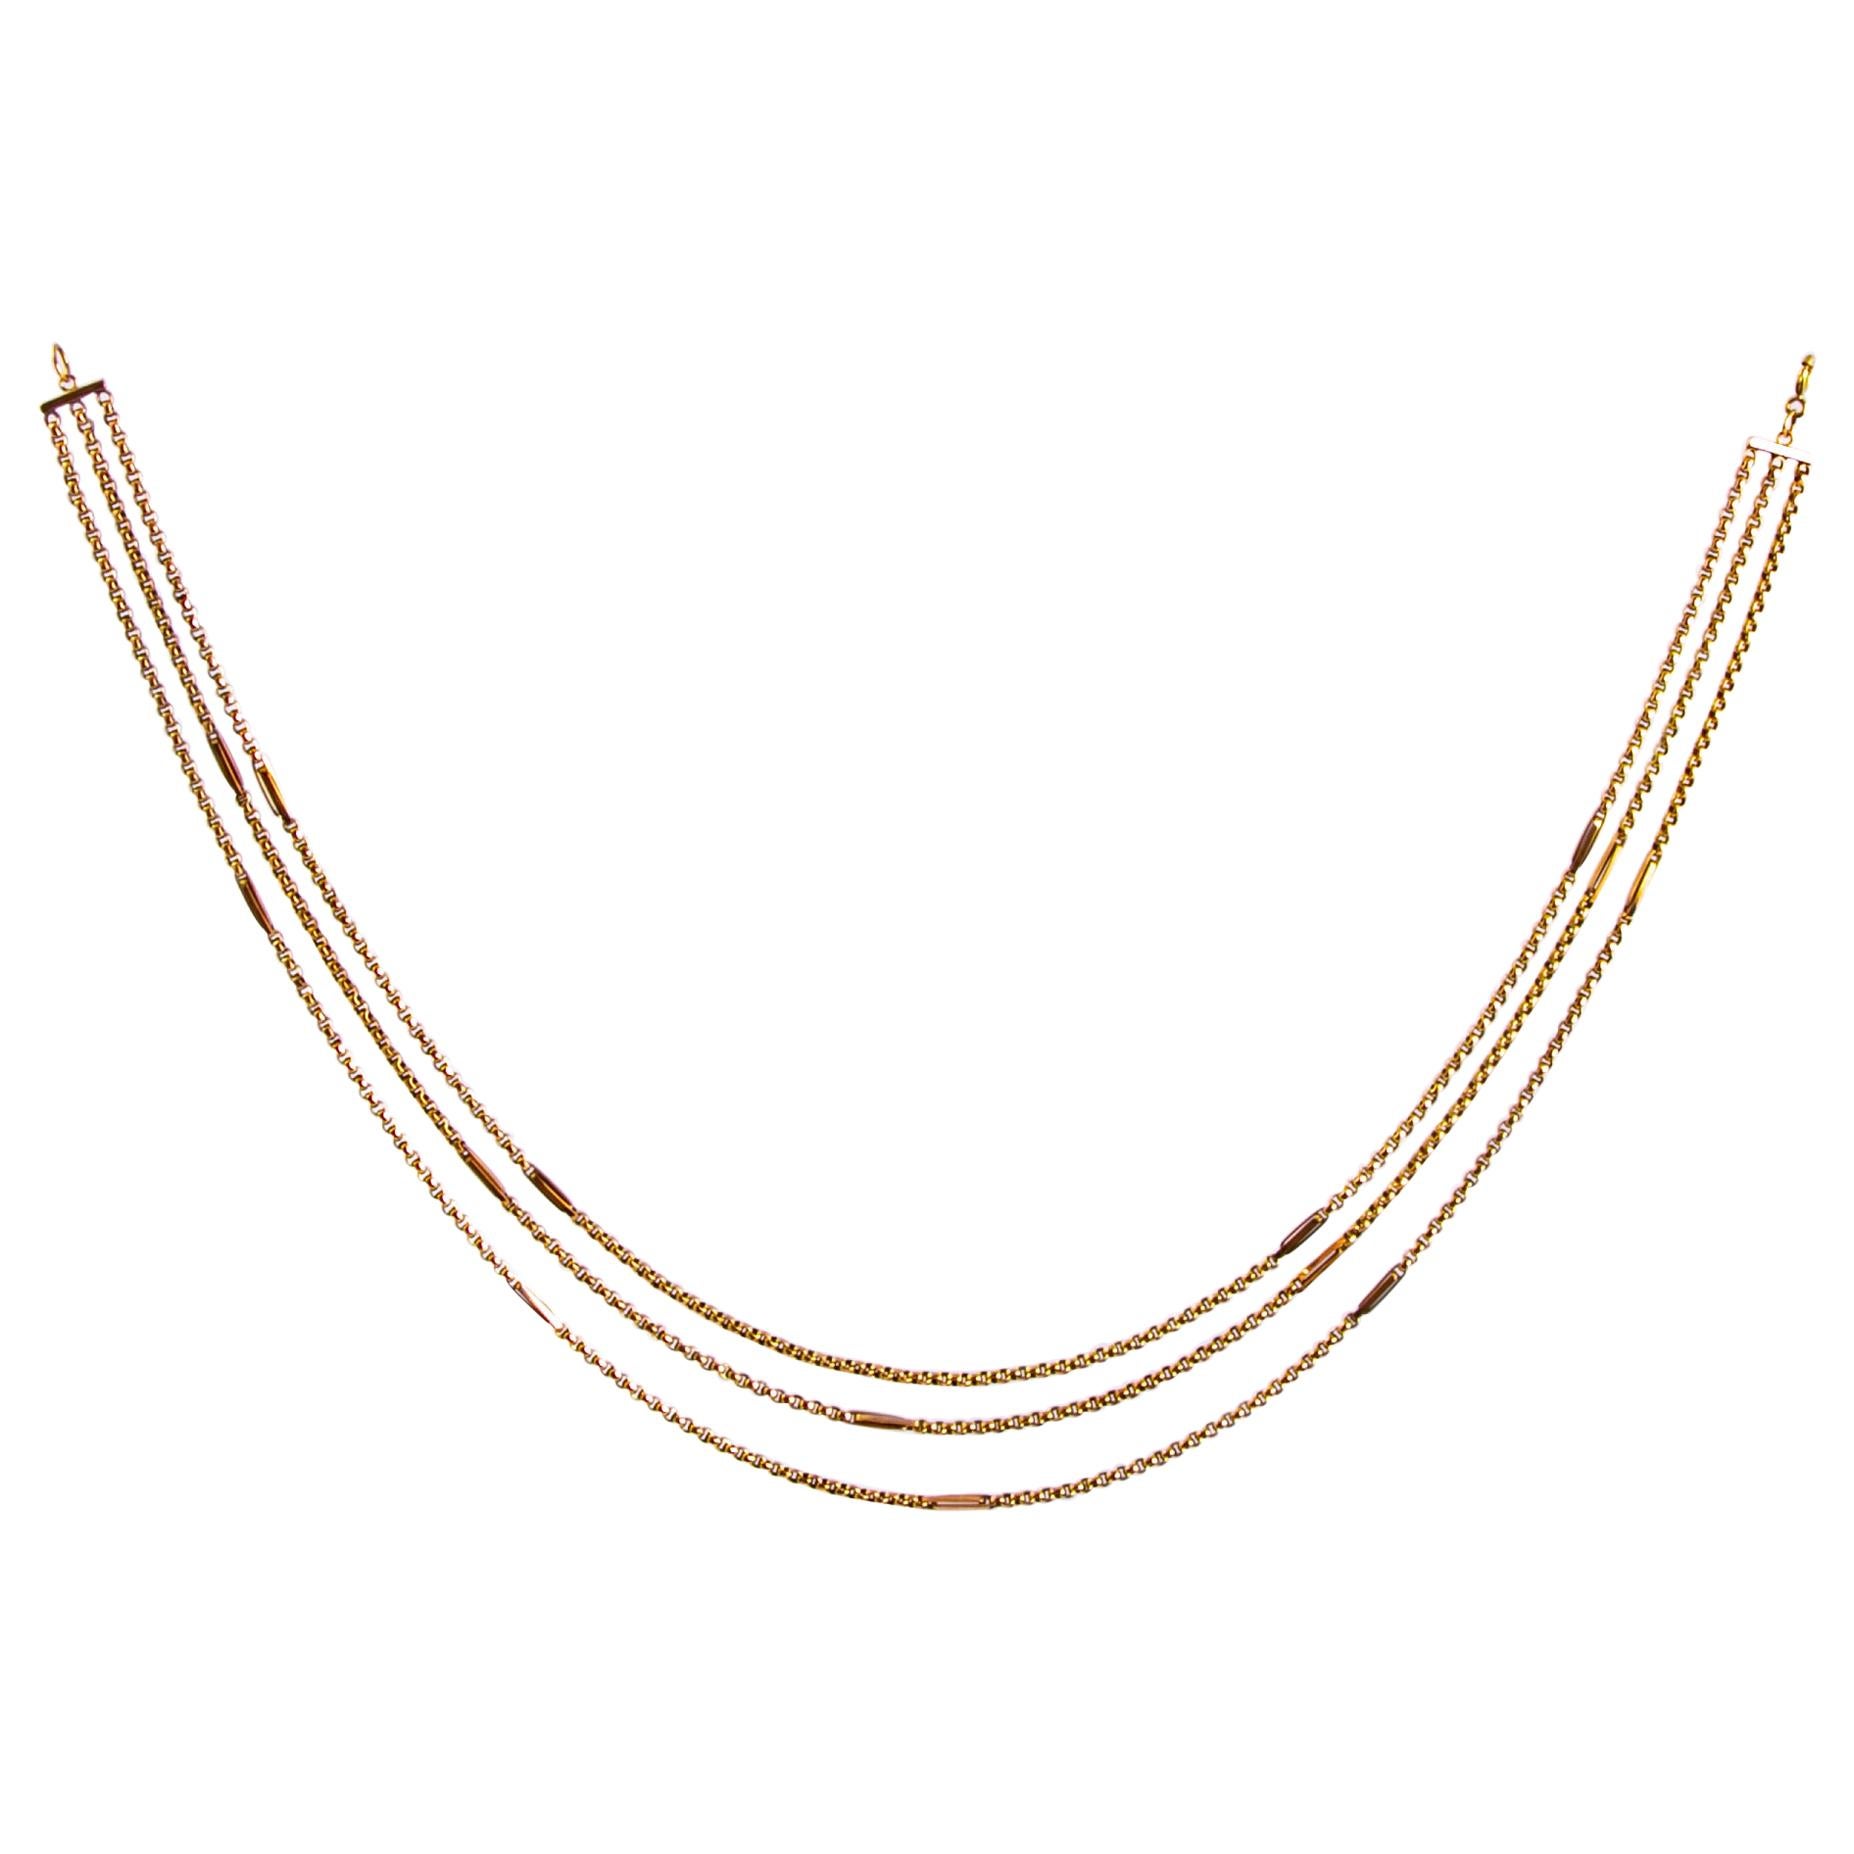 Edwardian Triple Chain 9 Carat Gold Necklace